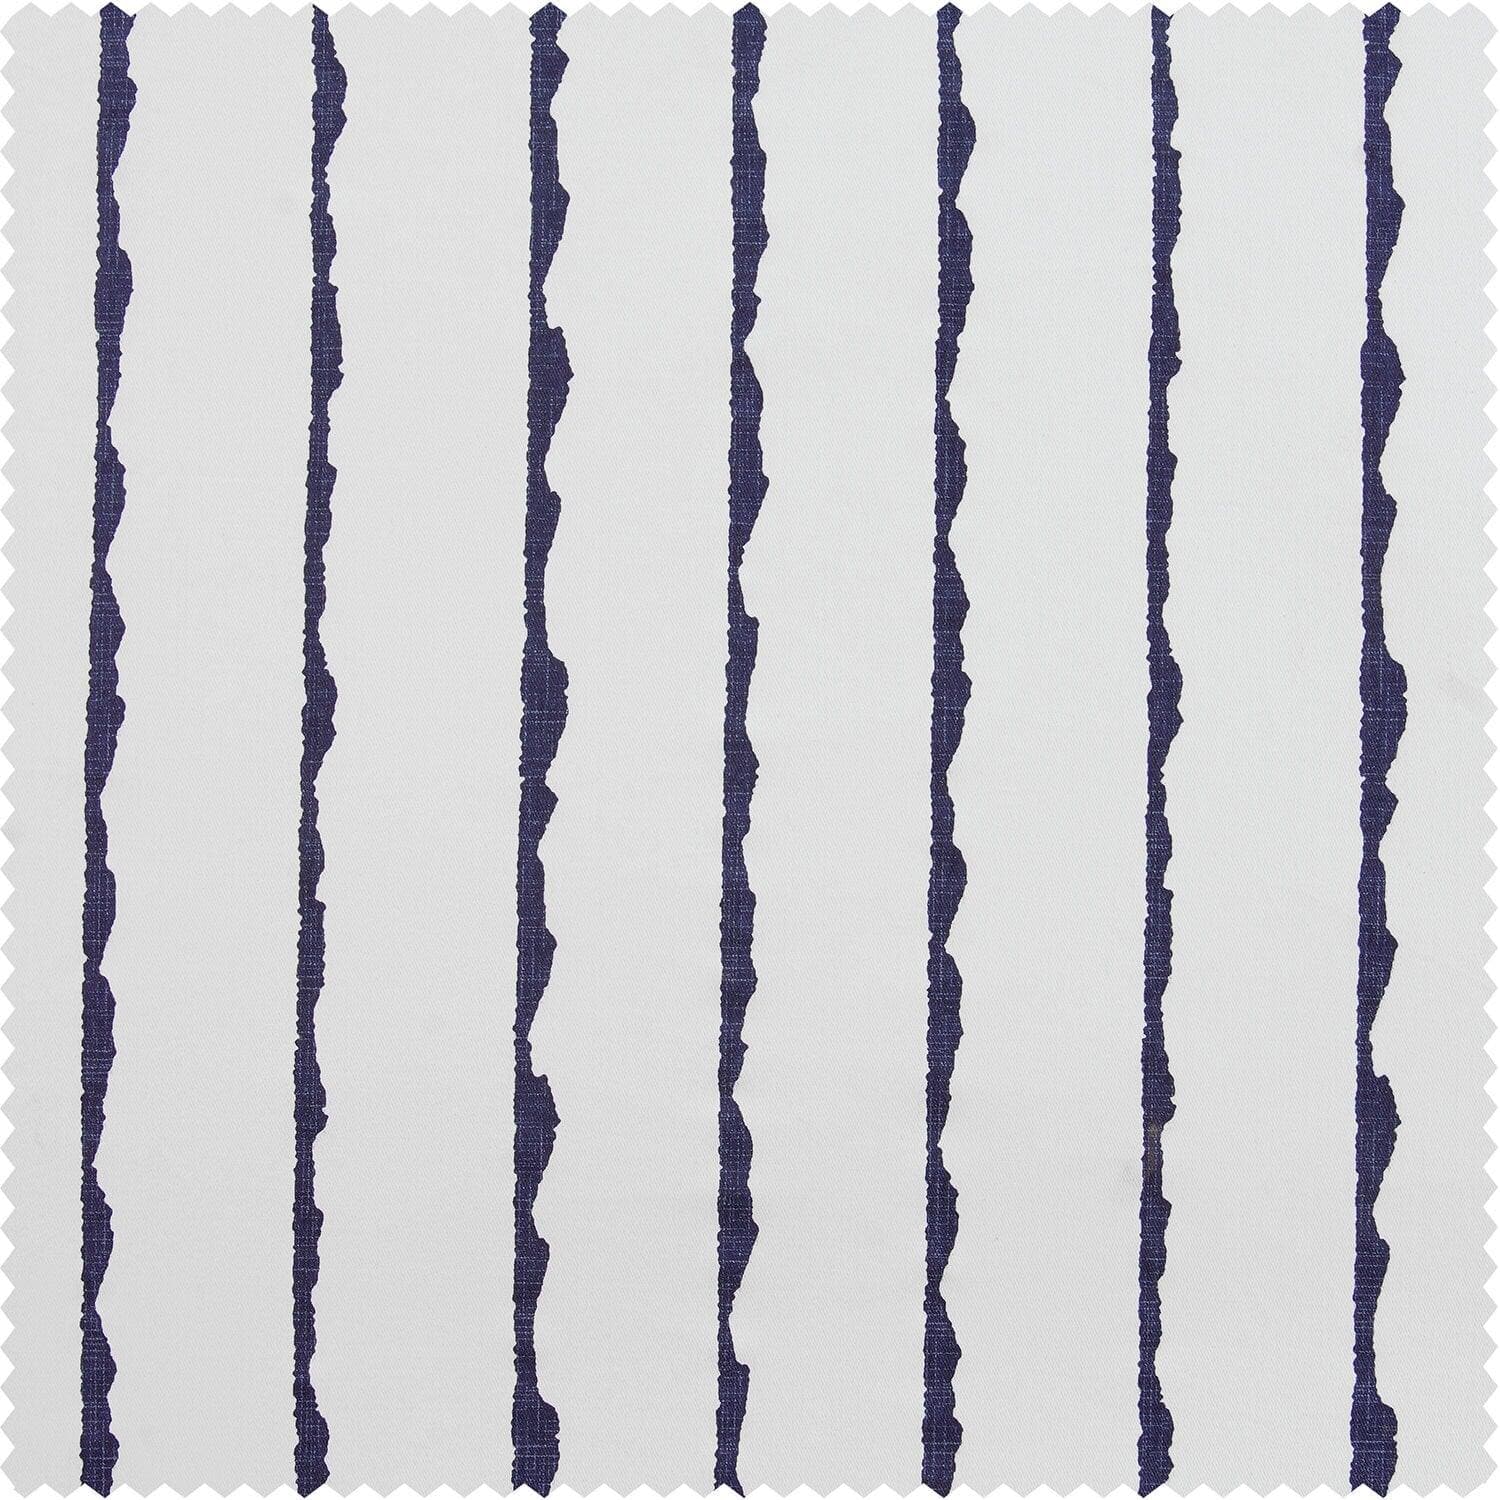 Sharkskin Blue Striped Printed Cotton Custom Curtain